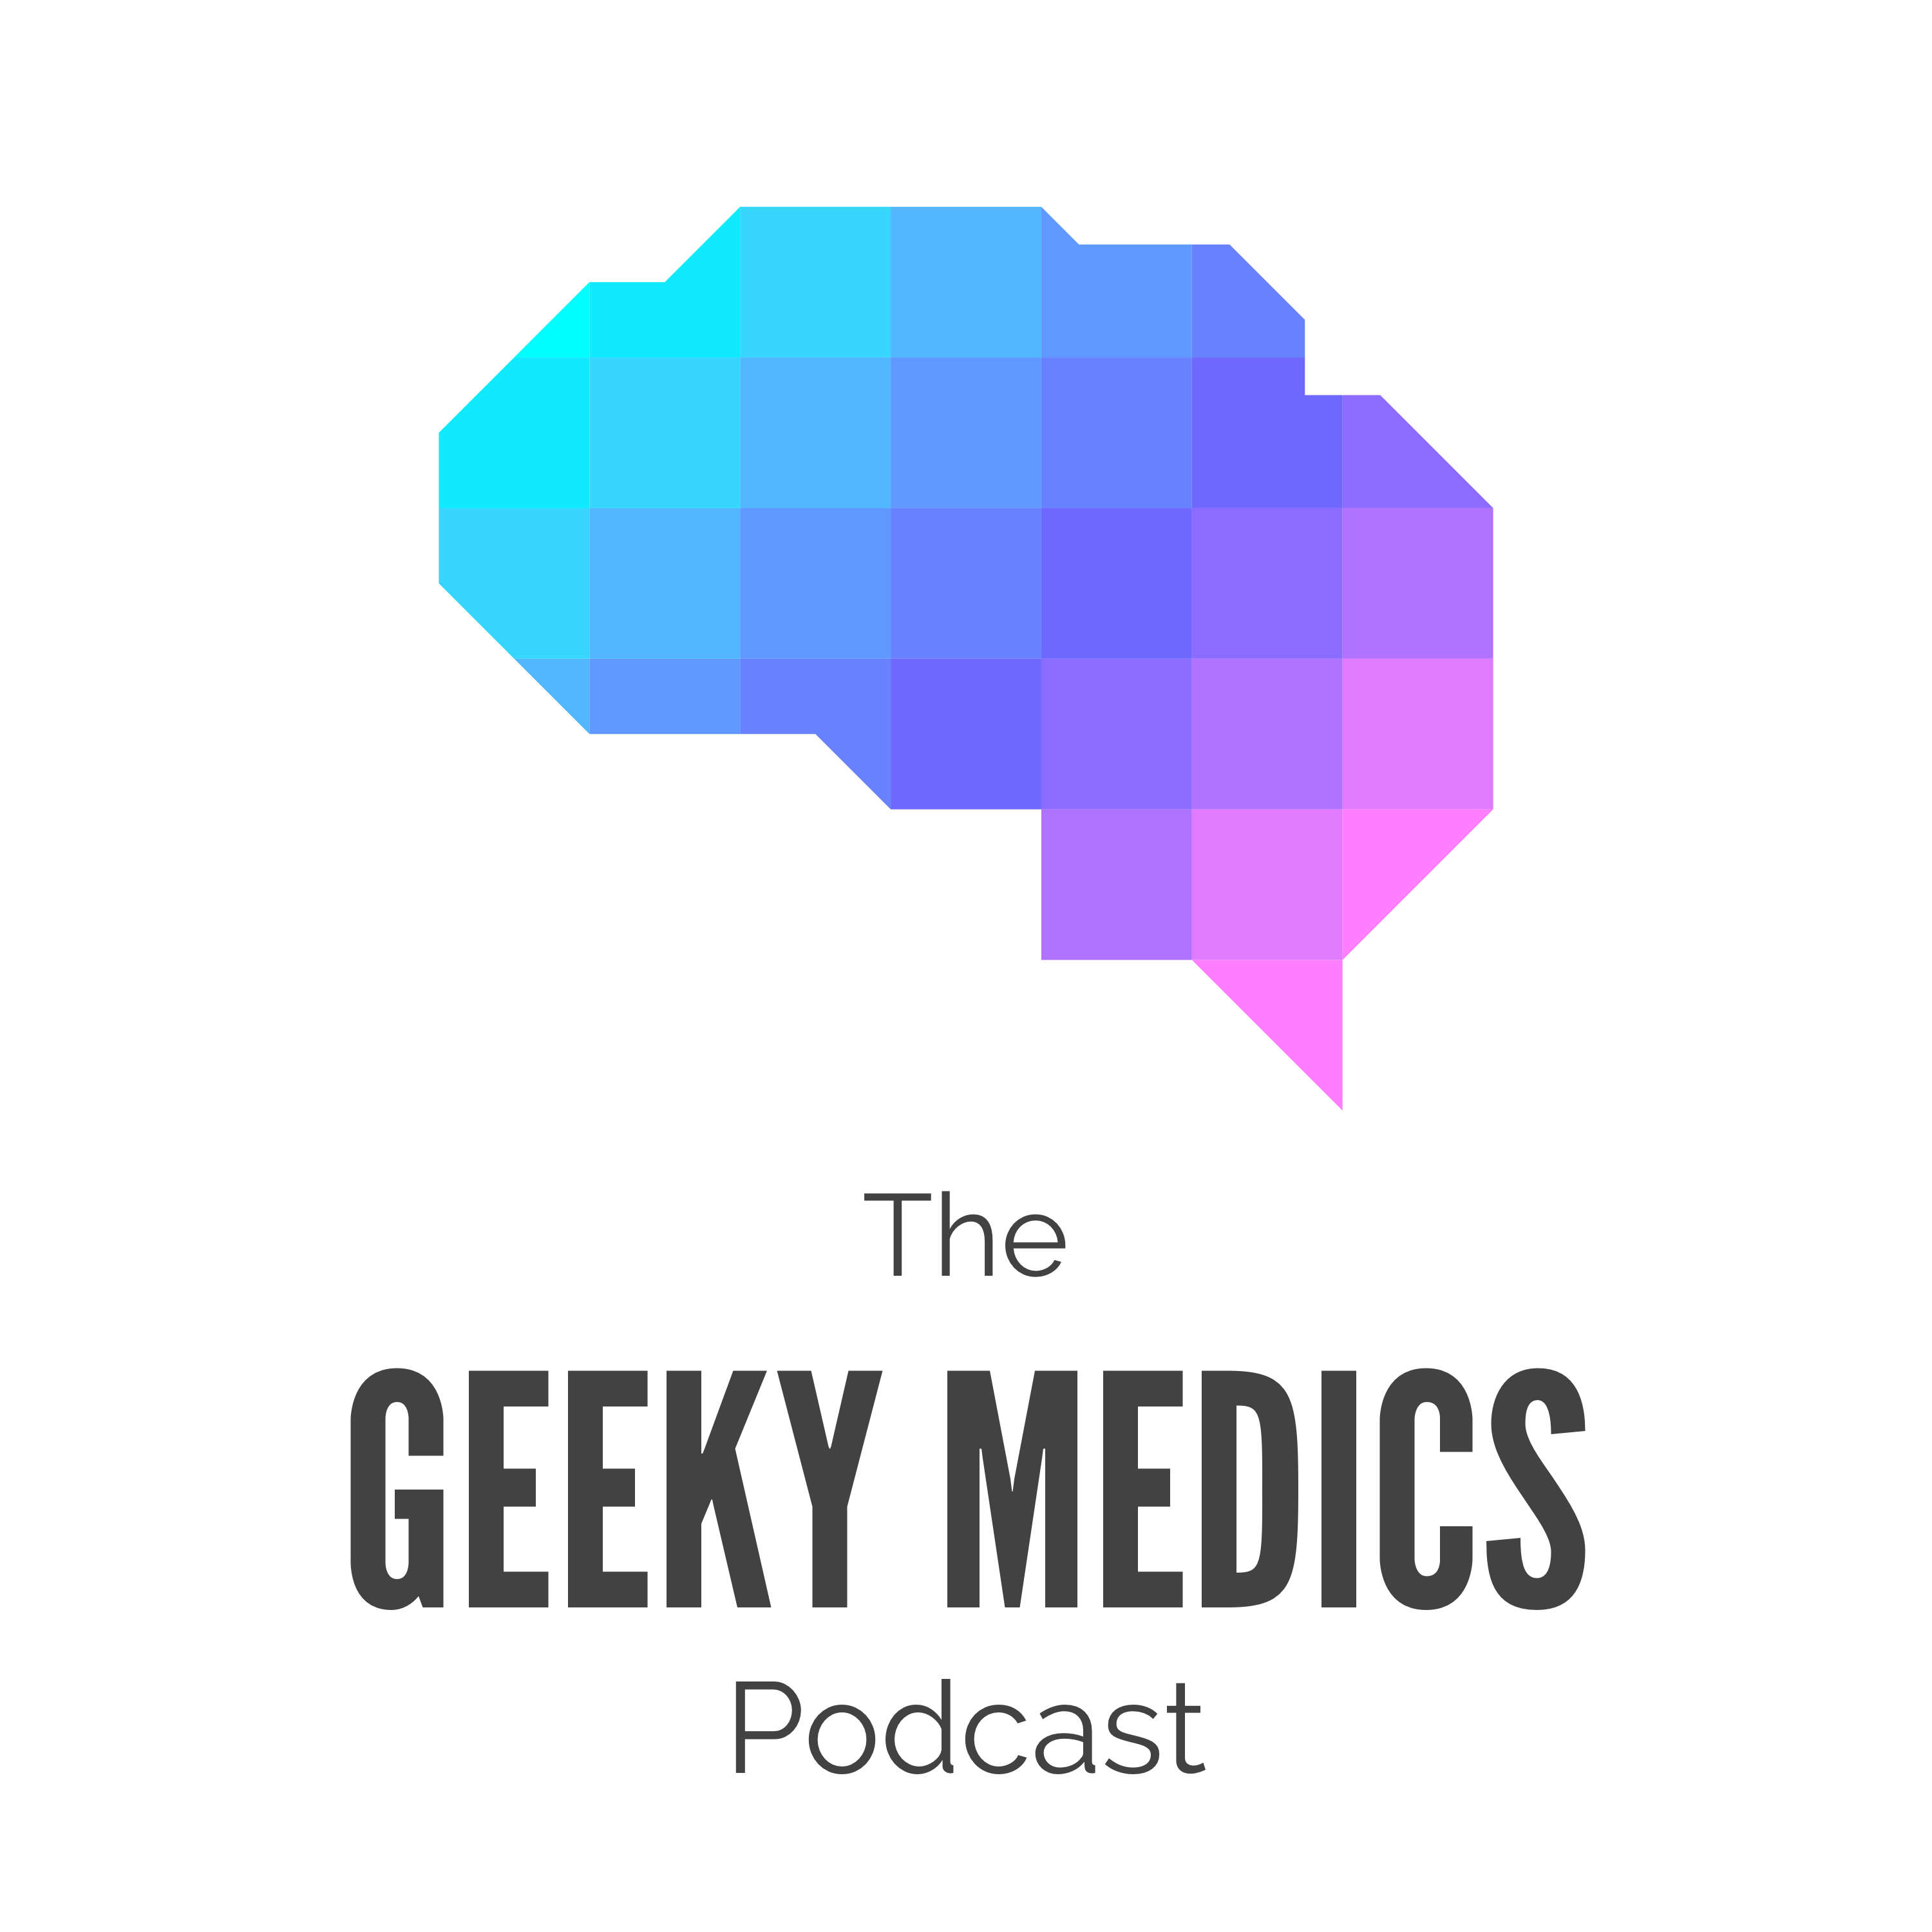 The Geeky Medics logo